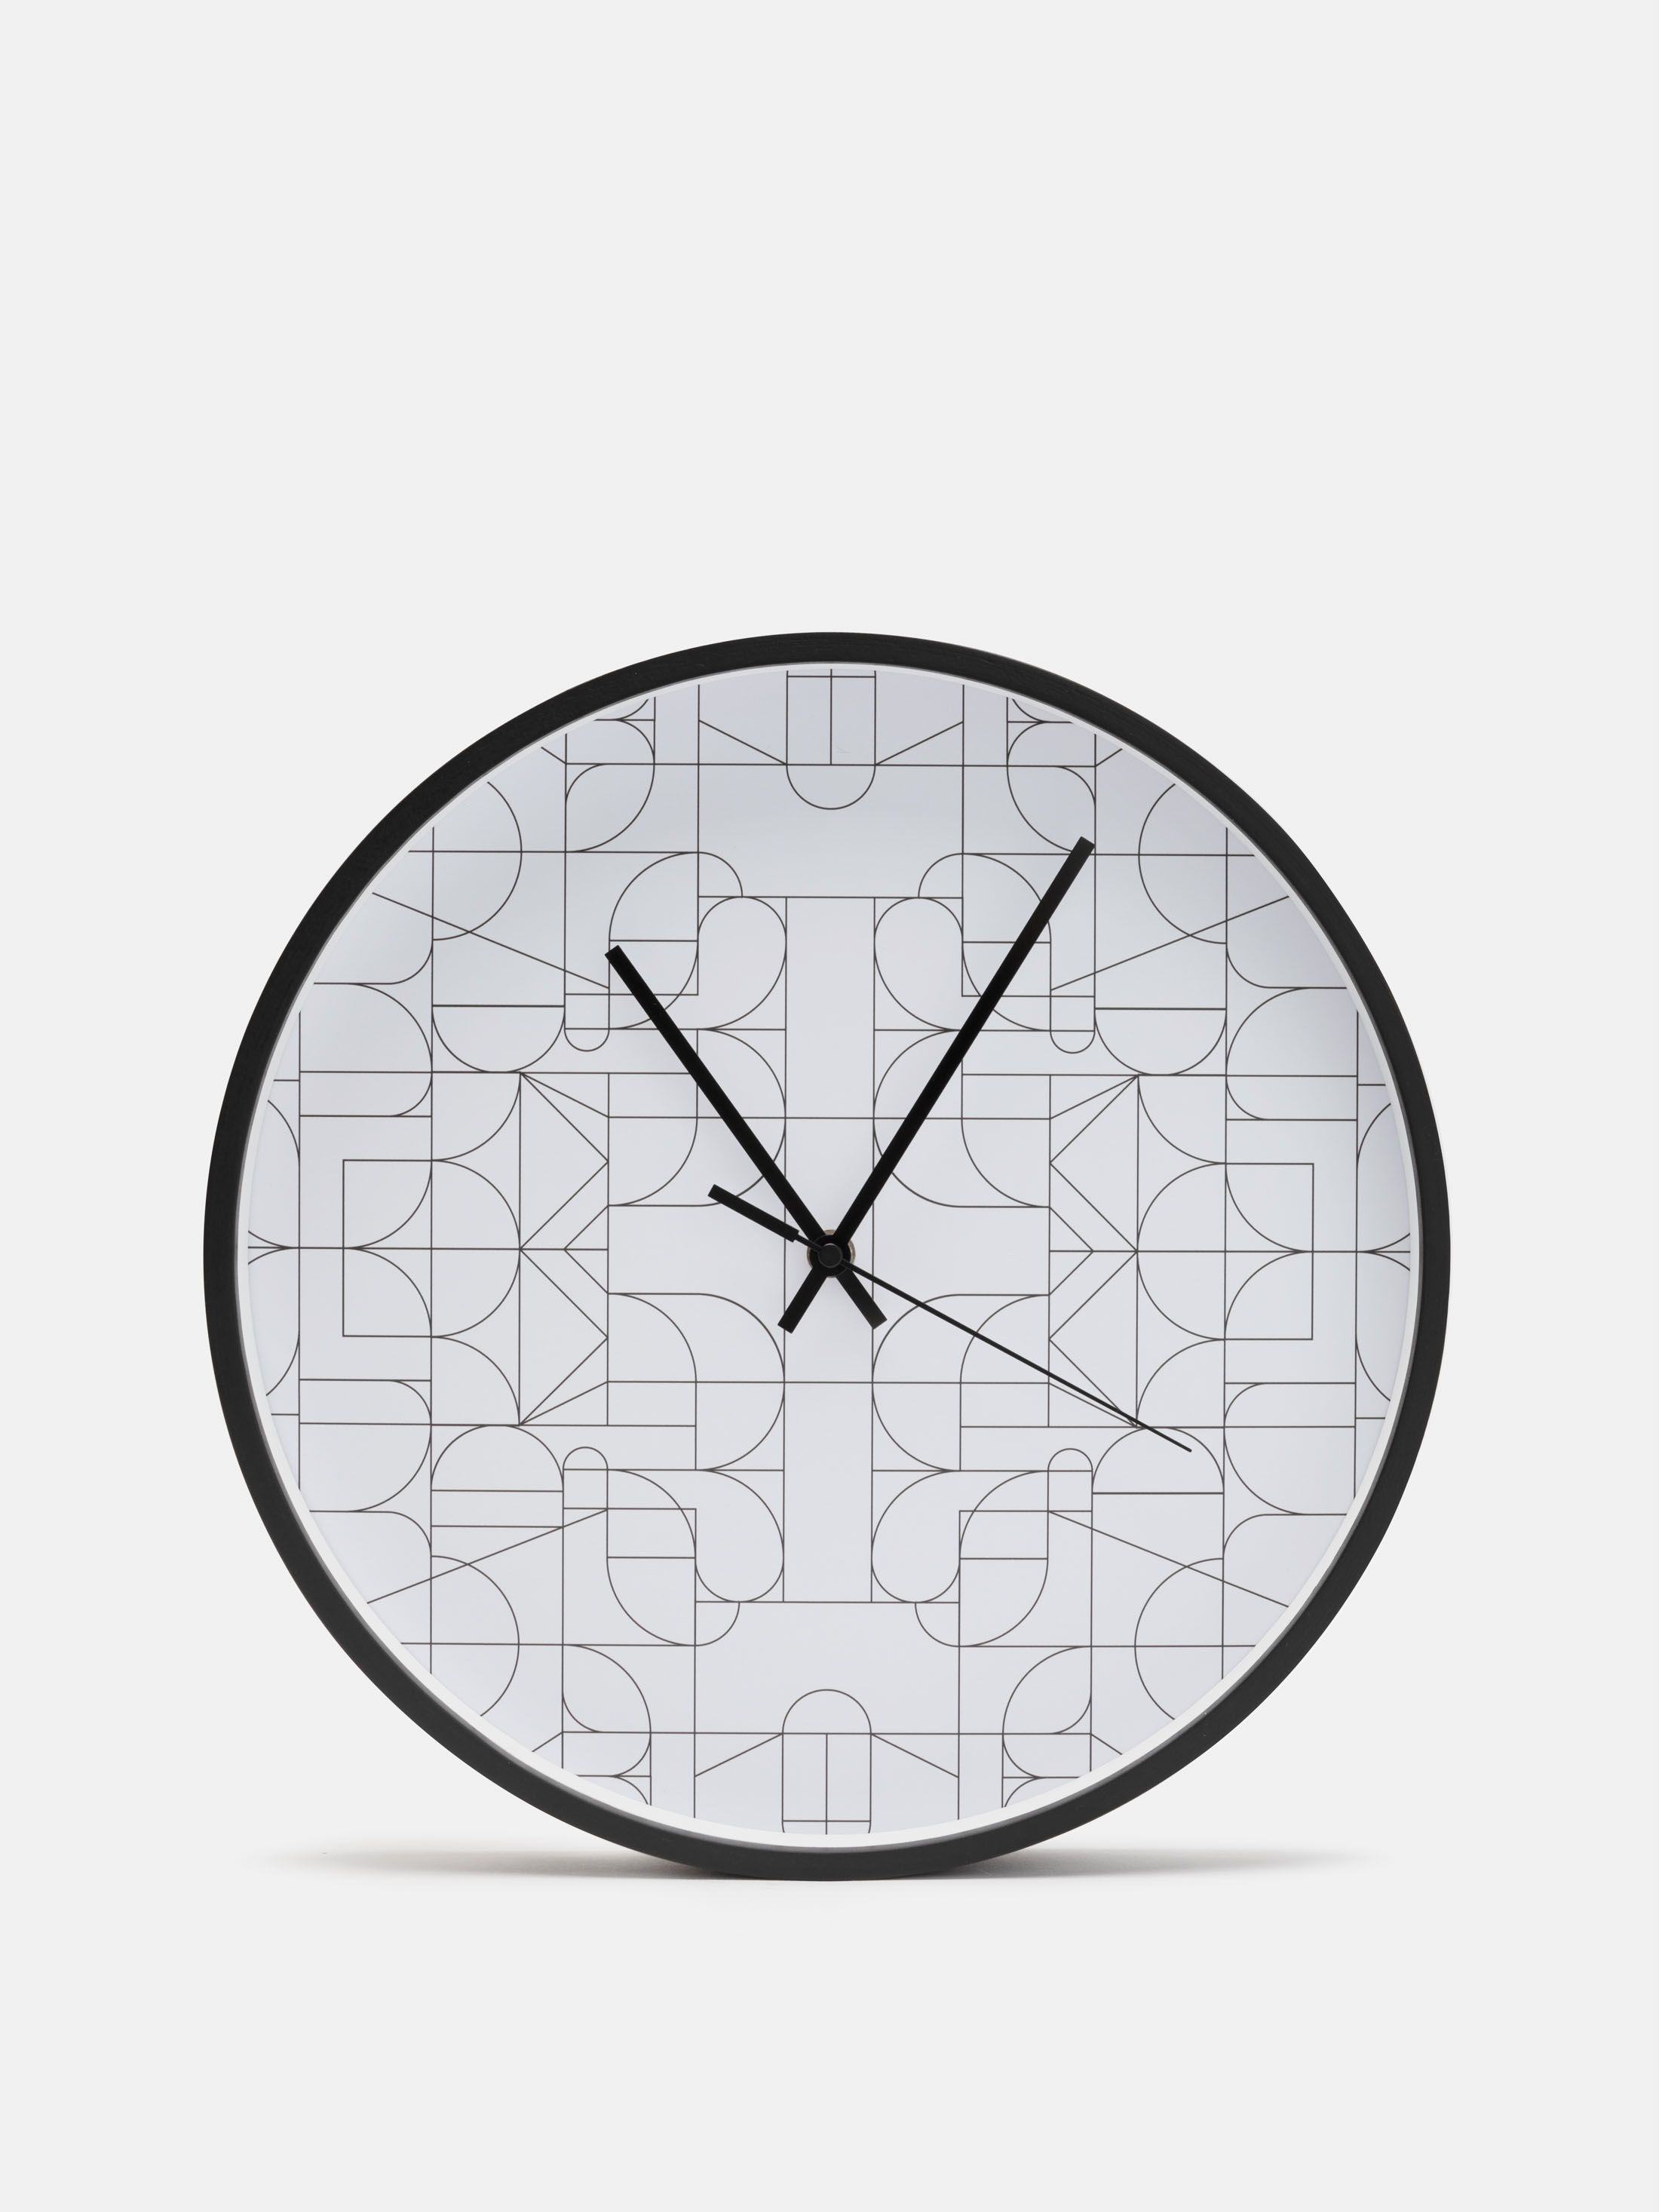 Custom wall clock clock printed with your original designs